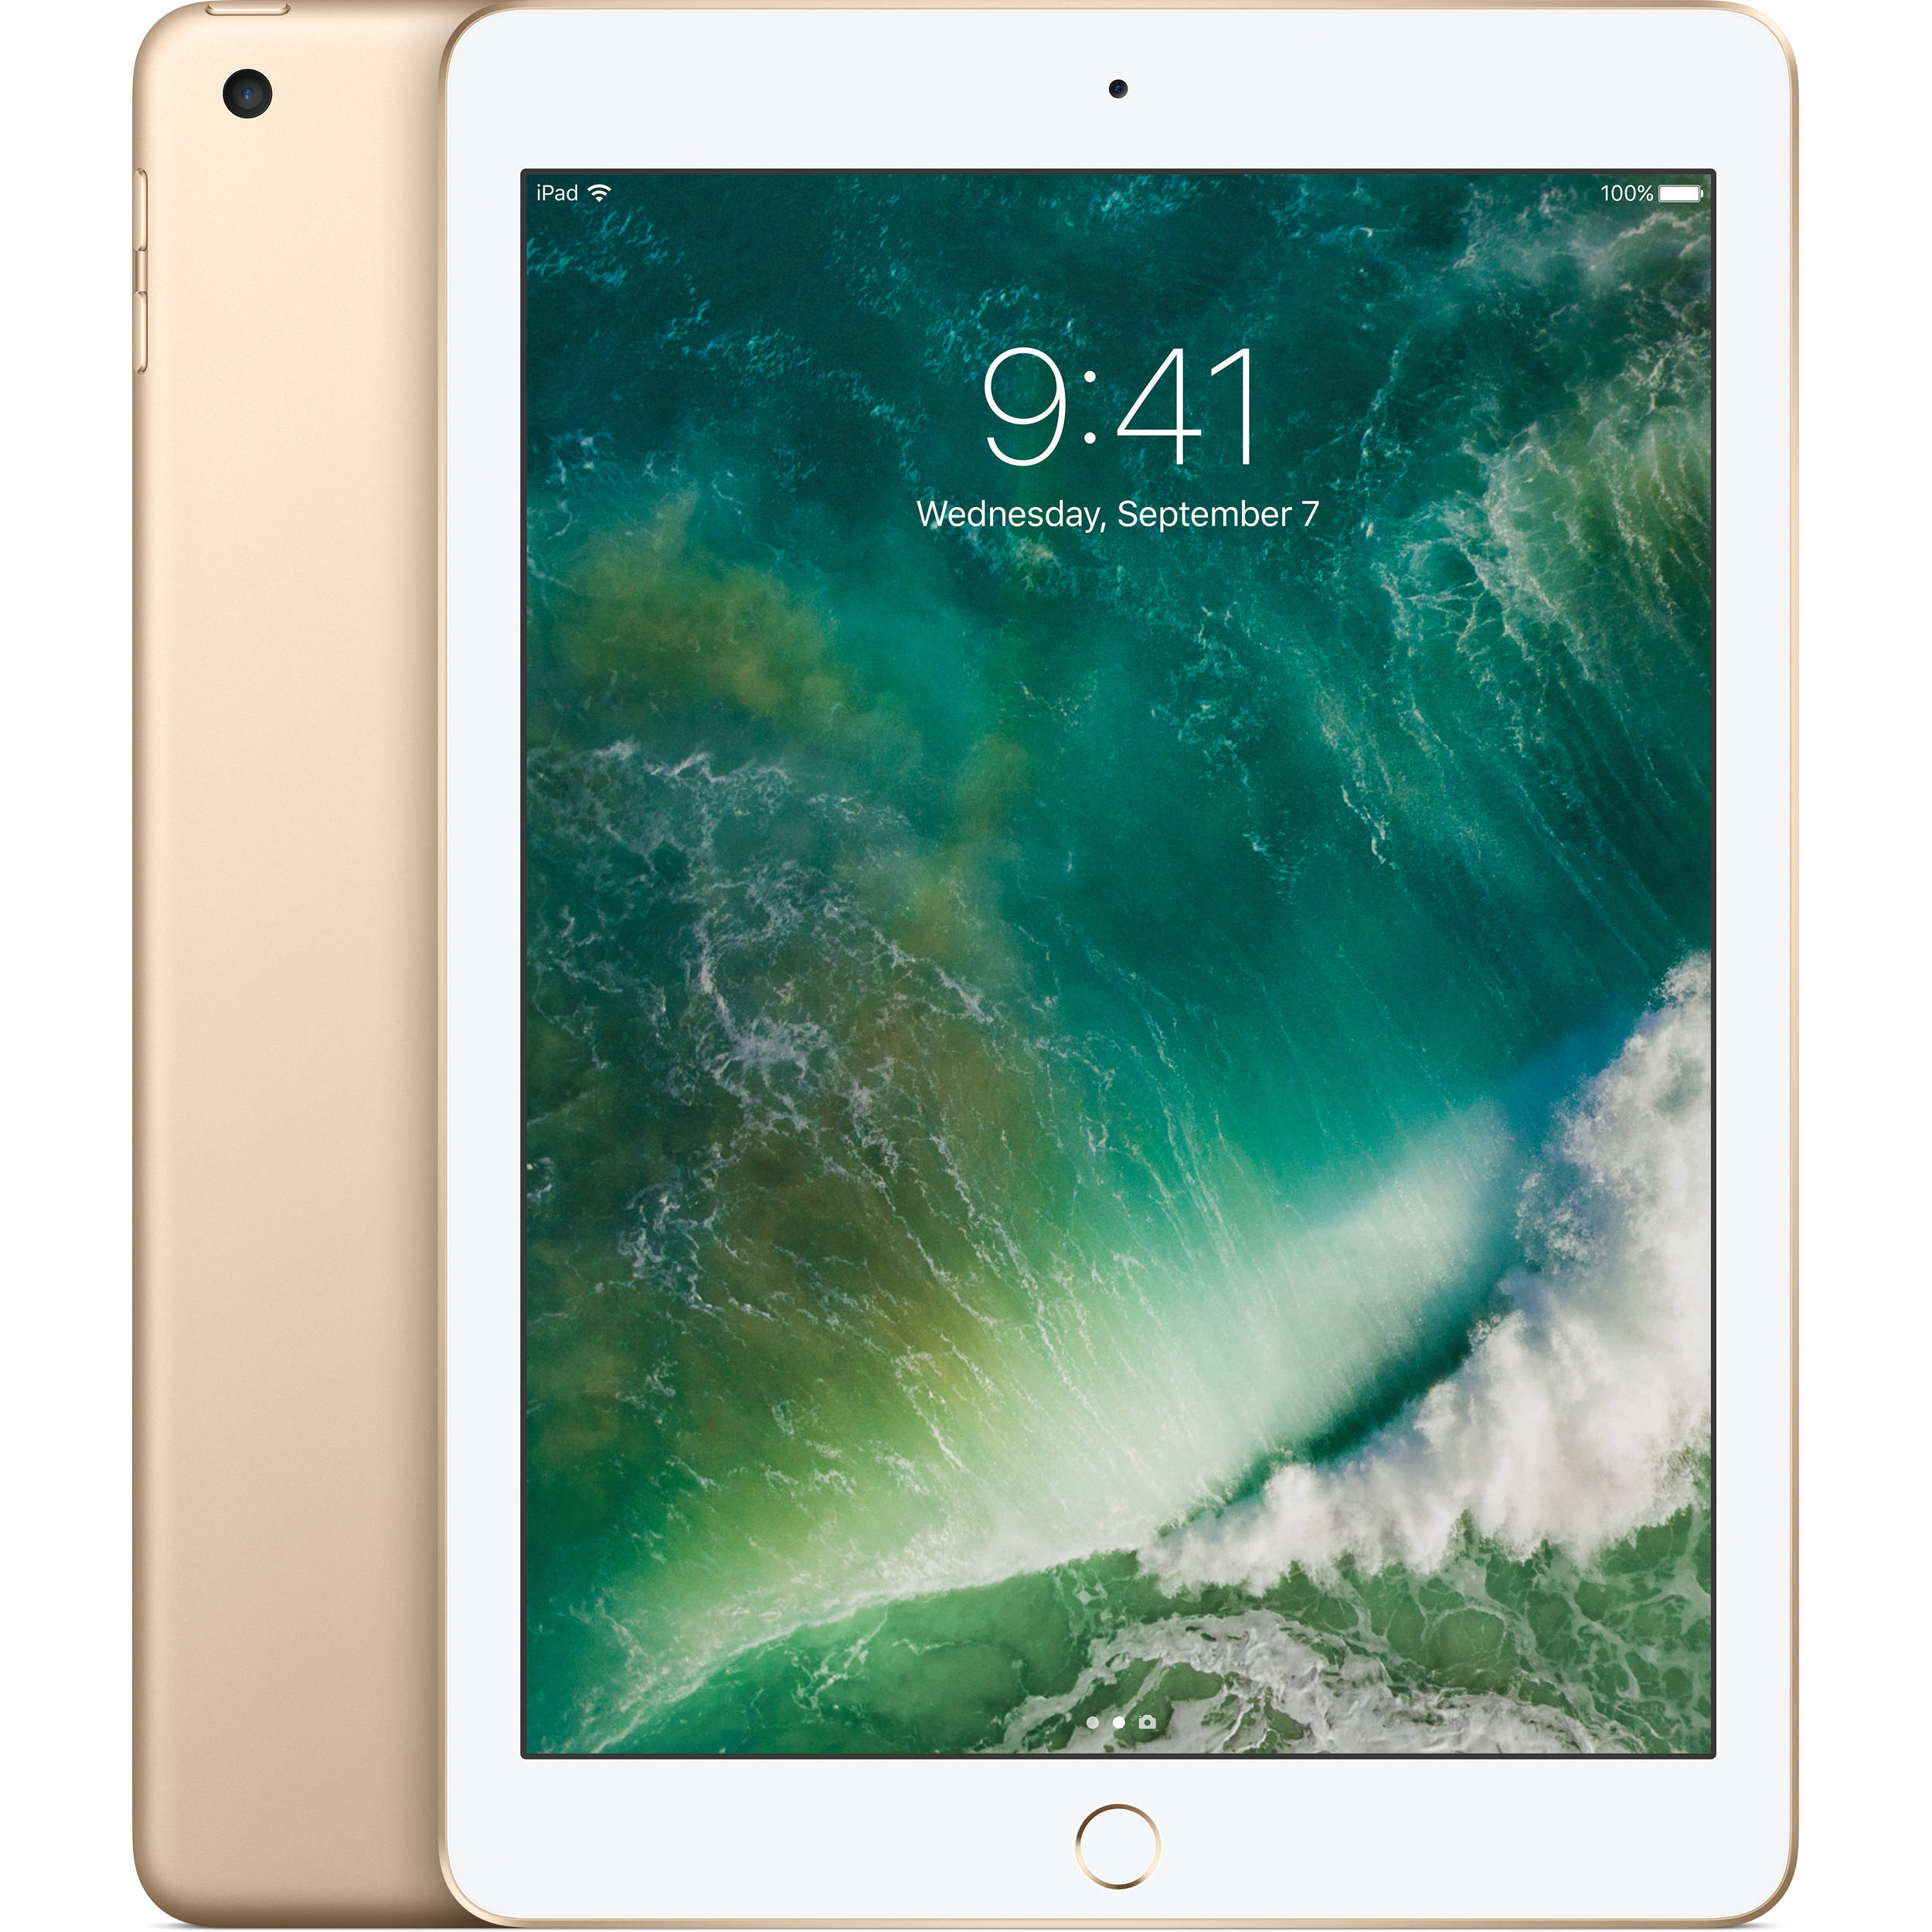 Restored Apple iPad 5th Generation 128GB WiFi, Gold (Refurbished) - image 1 of 5